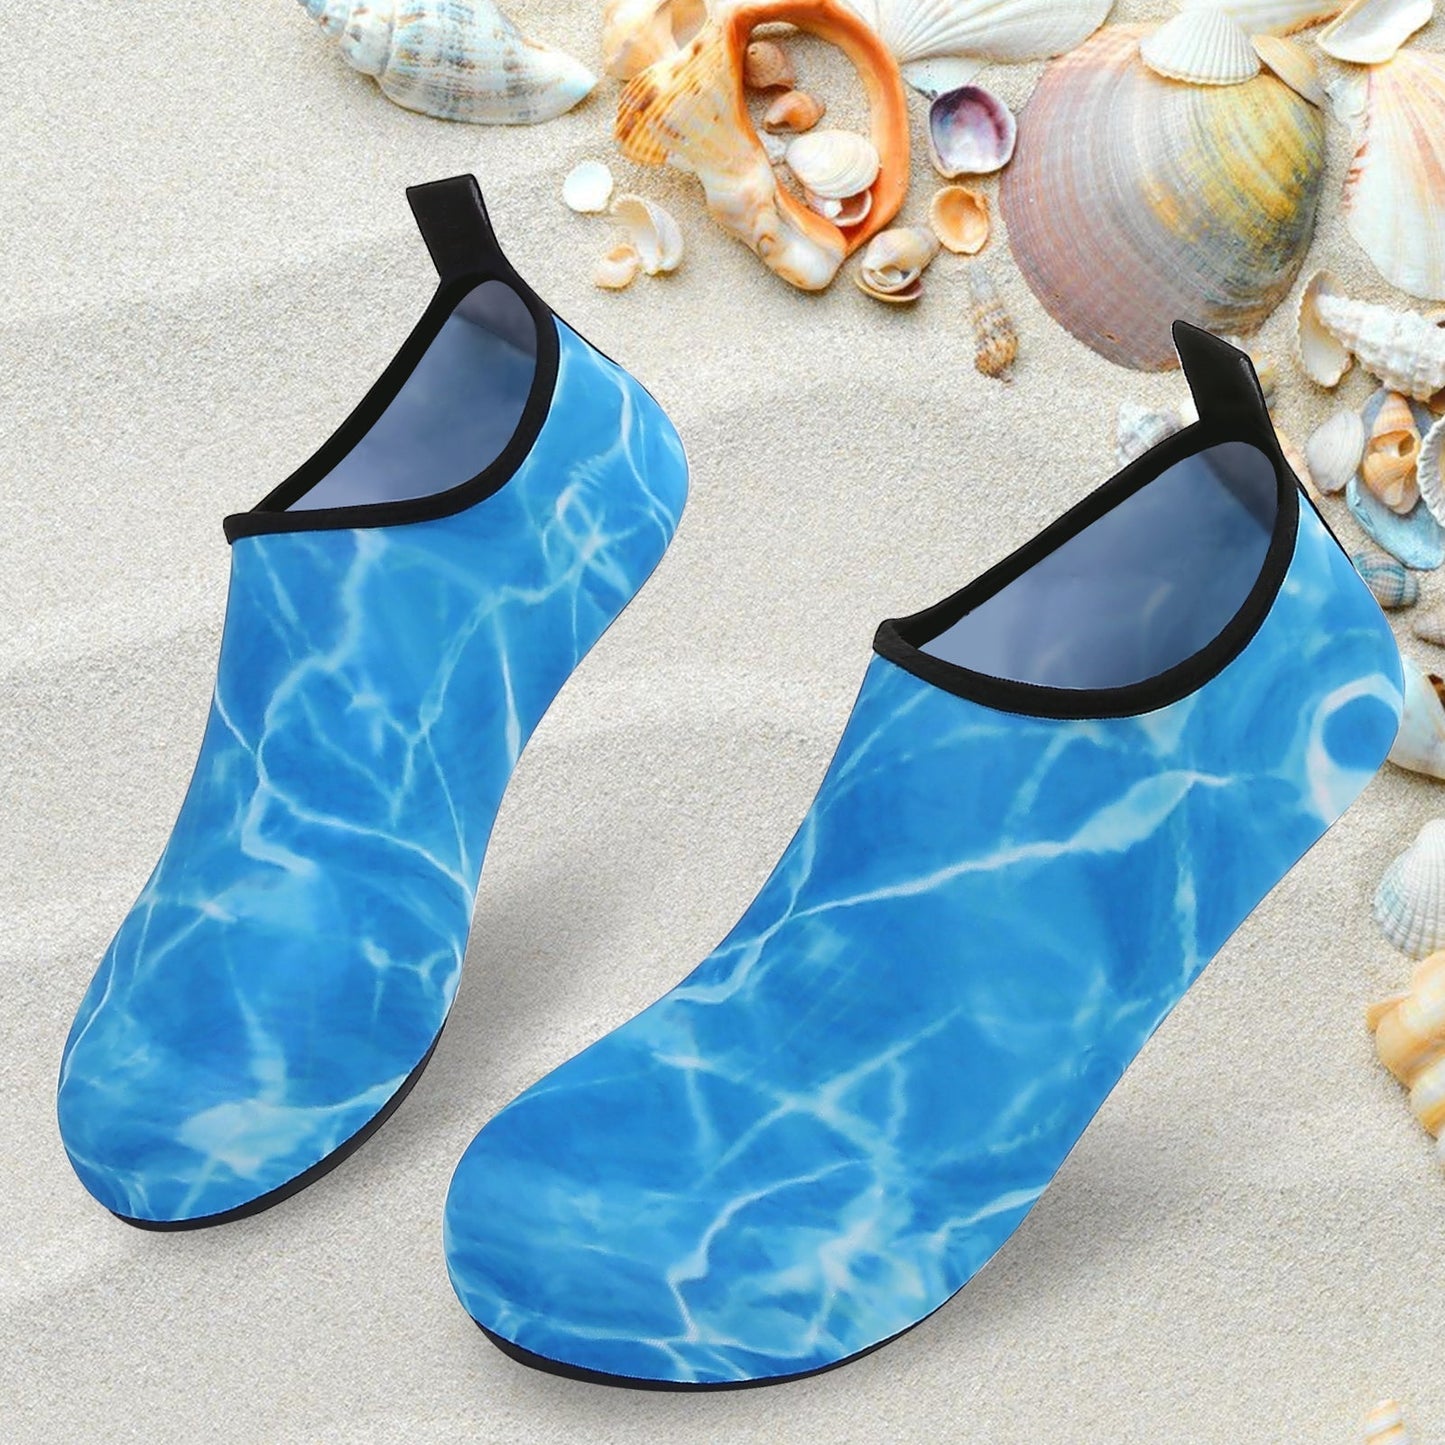 Men and Women a Slip On Barefoot Quick-Dry Beach Aqua Yoga Water Shoes (Aqua/Blue)